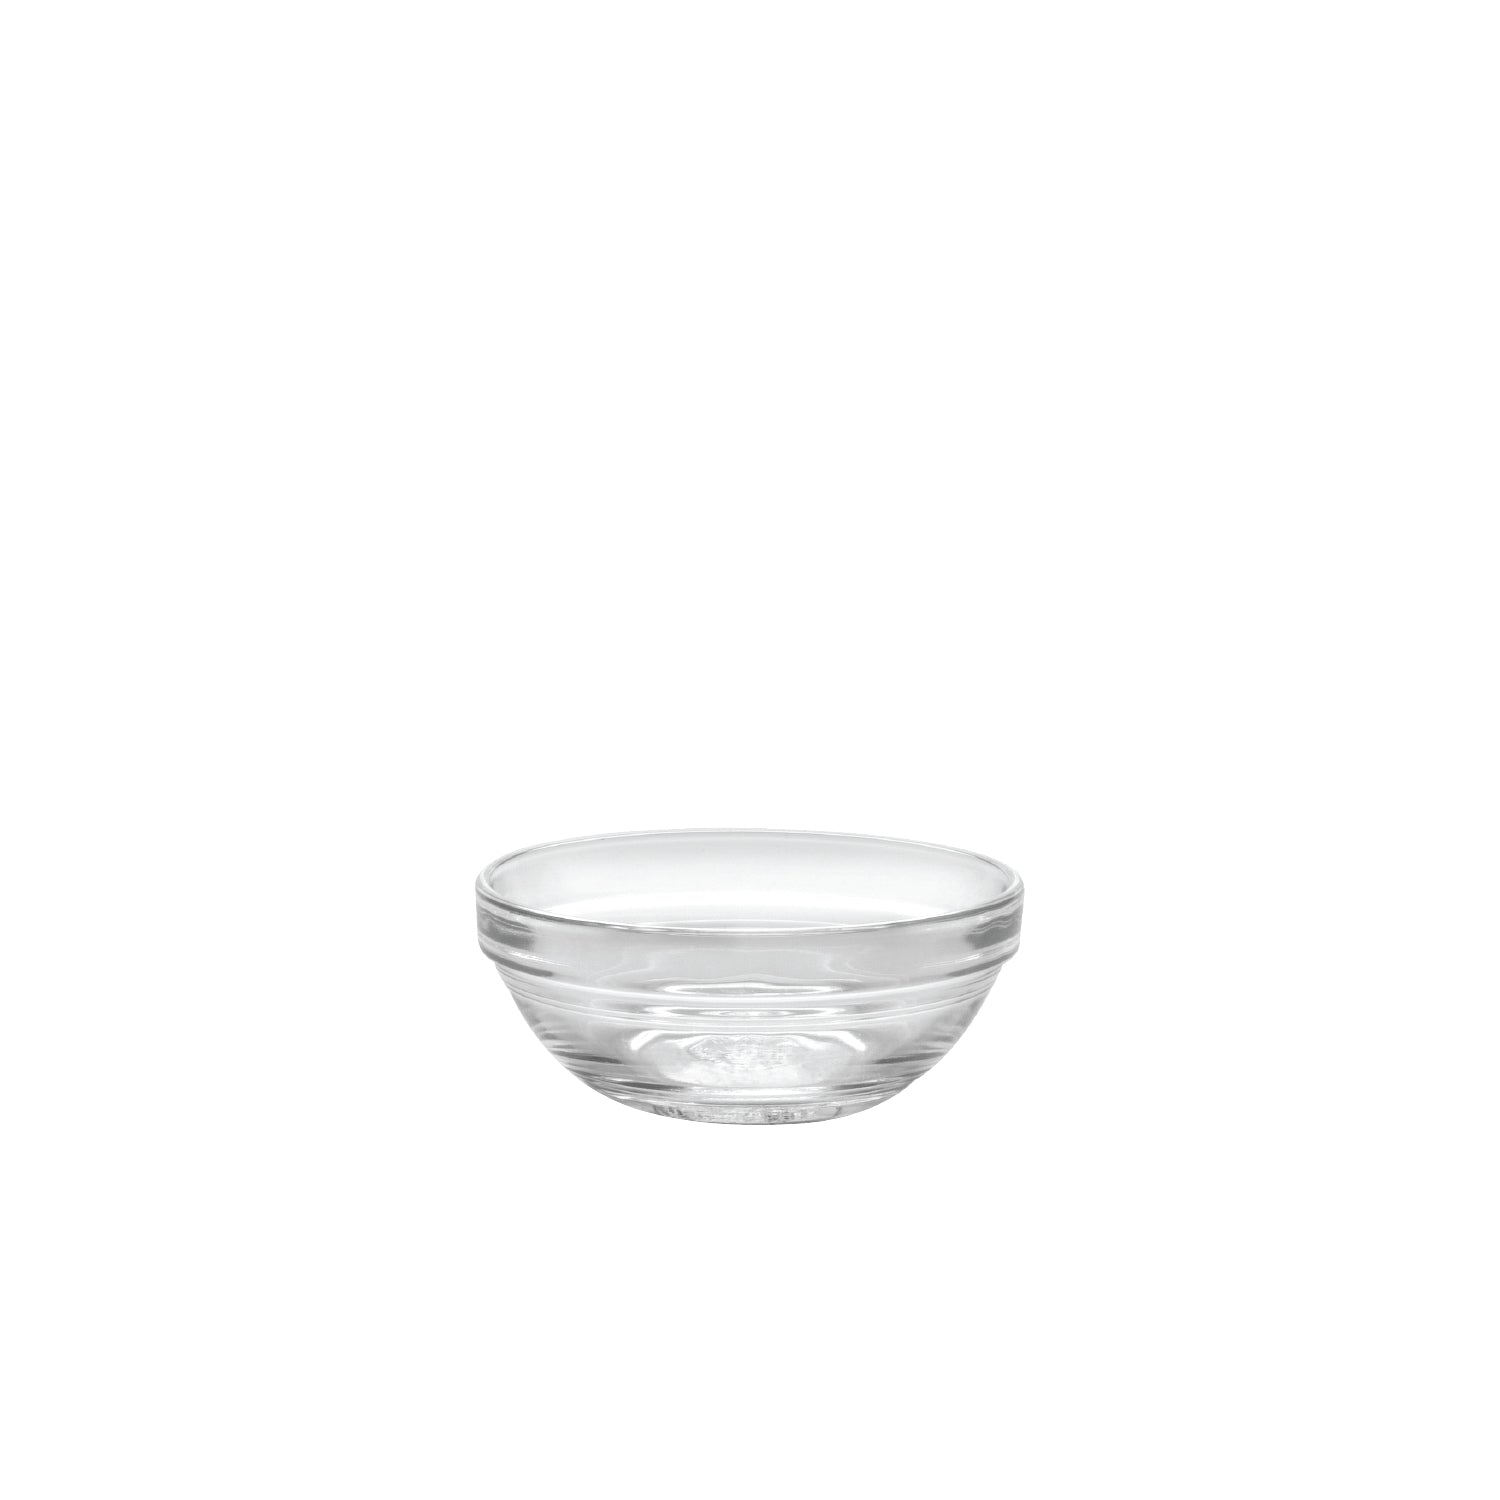 https://www.momjunction.com/wp-content/uploads/product-images/duralex-glass-mixing-bowls_afl906.jpg